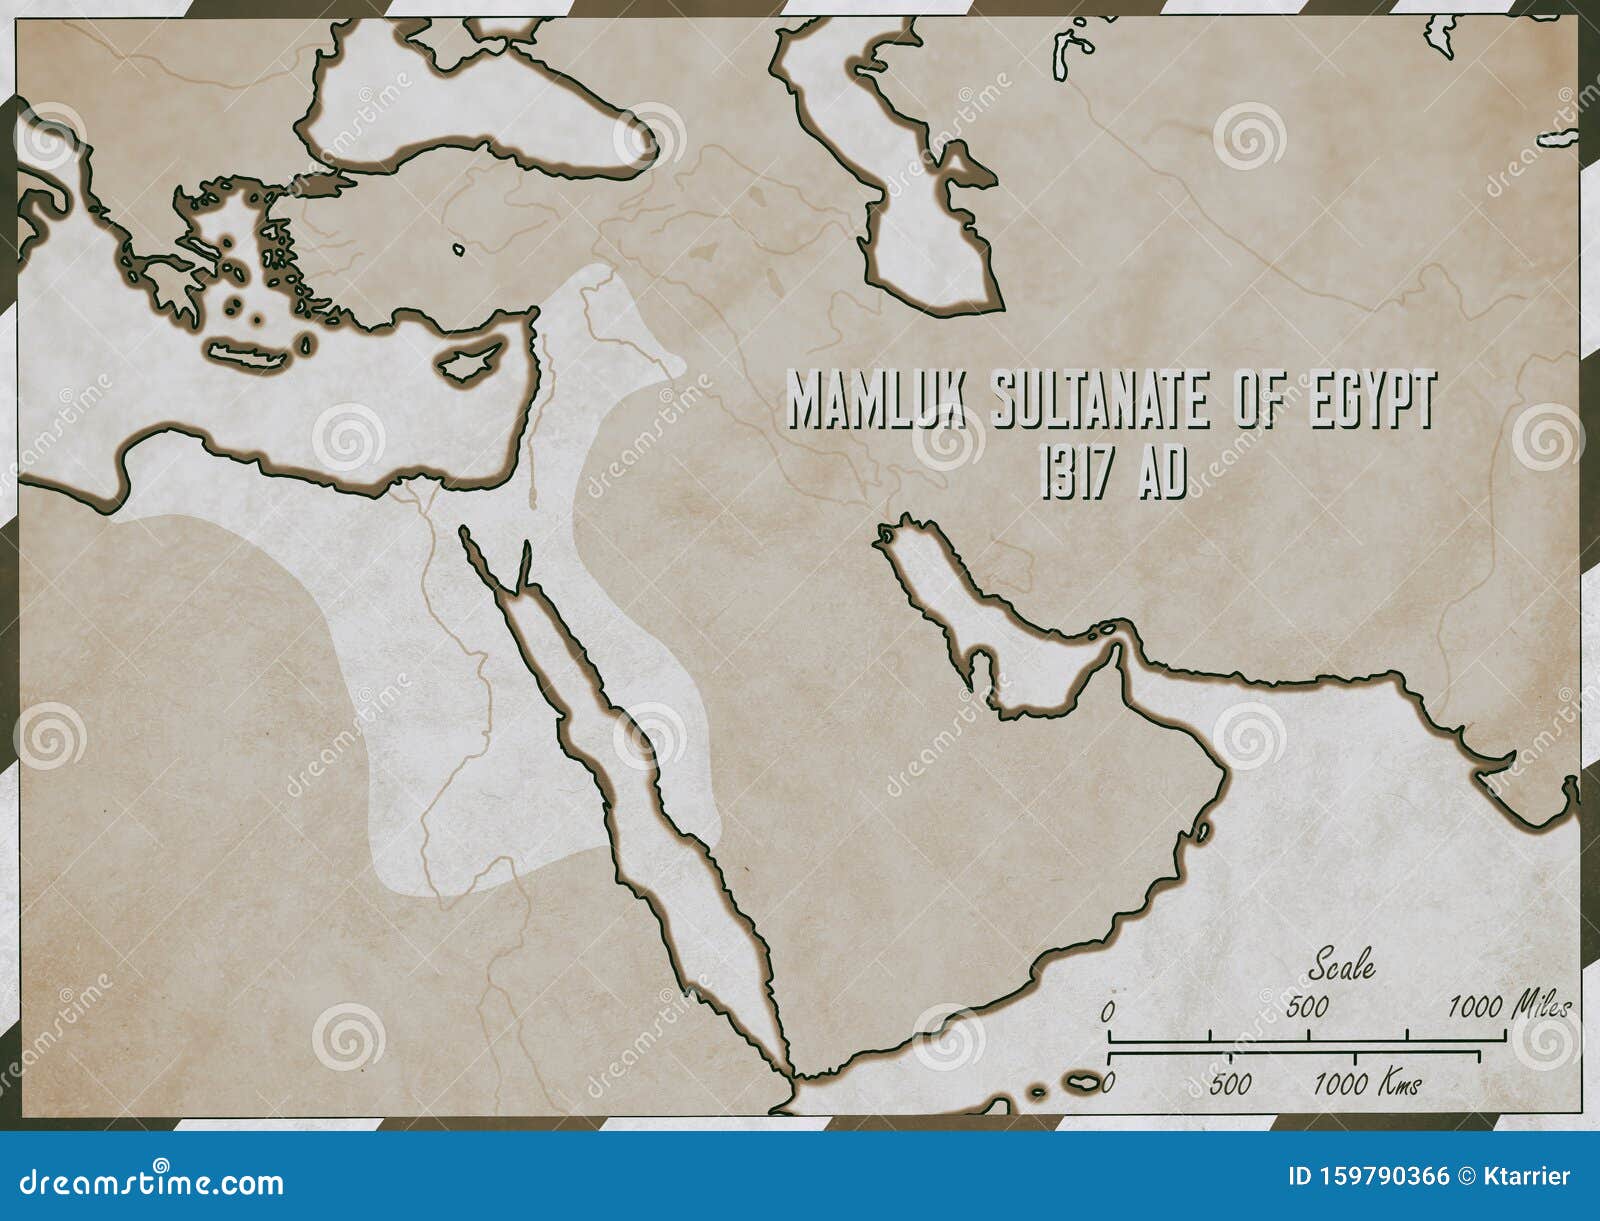 original hand drawn map. mamluk sultanate of egypt in 1317 ad